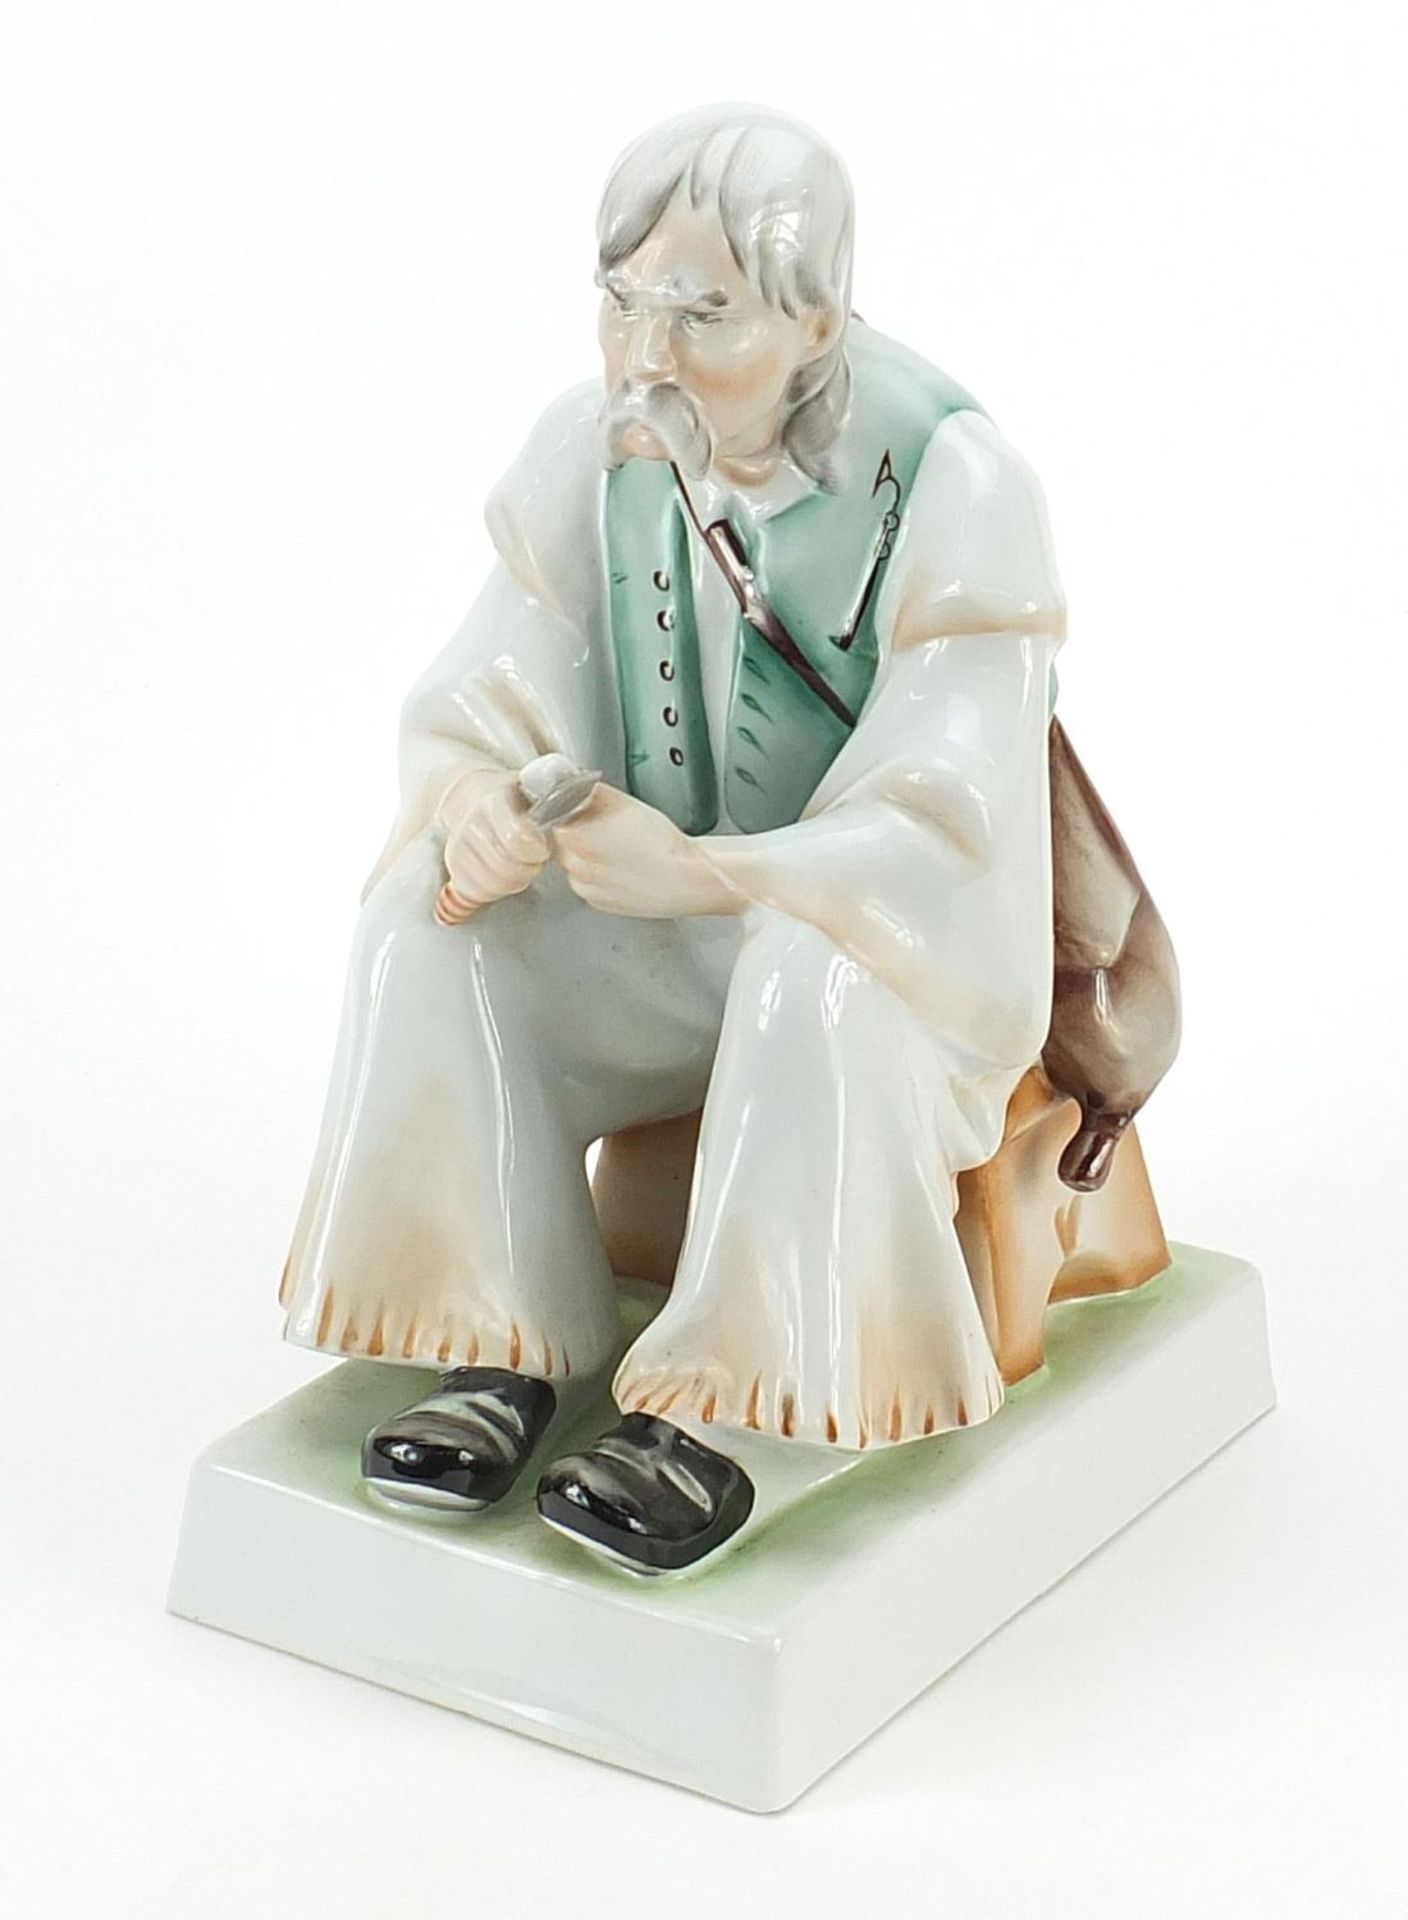 Zsolnay Pecs, Hungarian porcelain seated gentleman, 32cm high